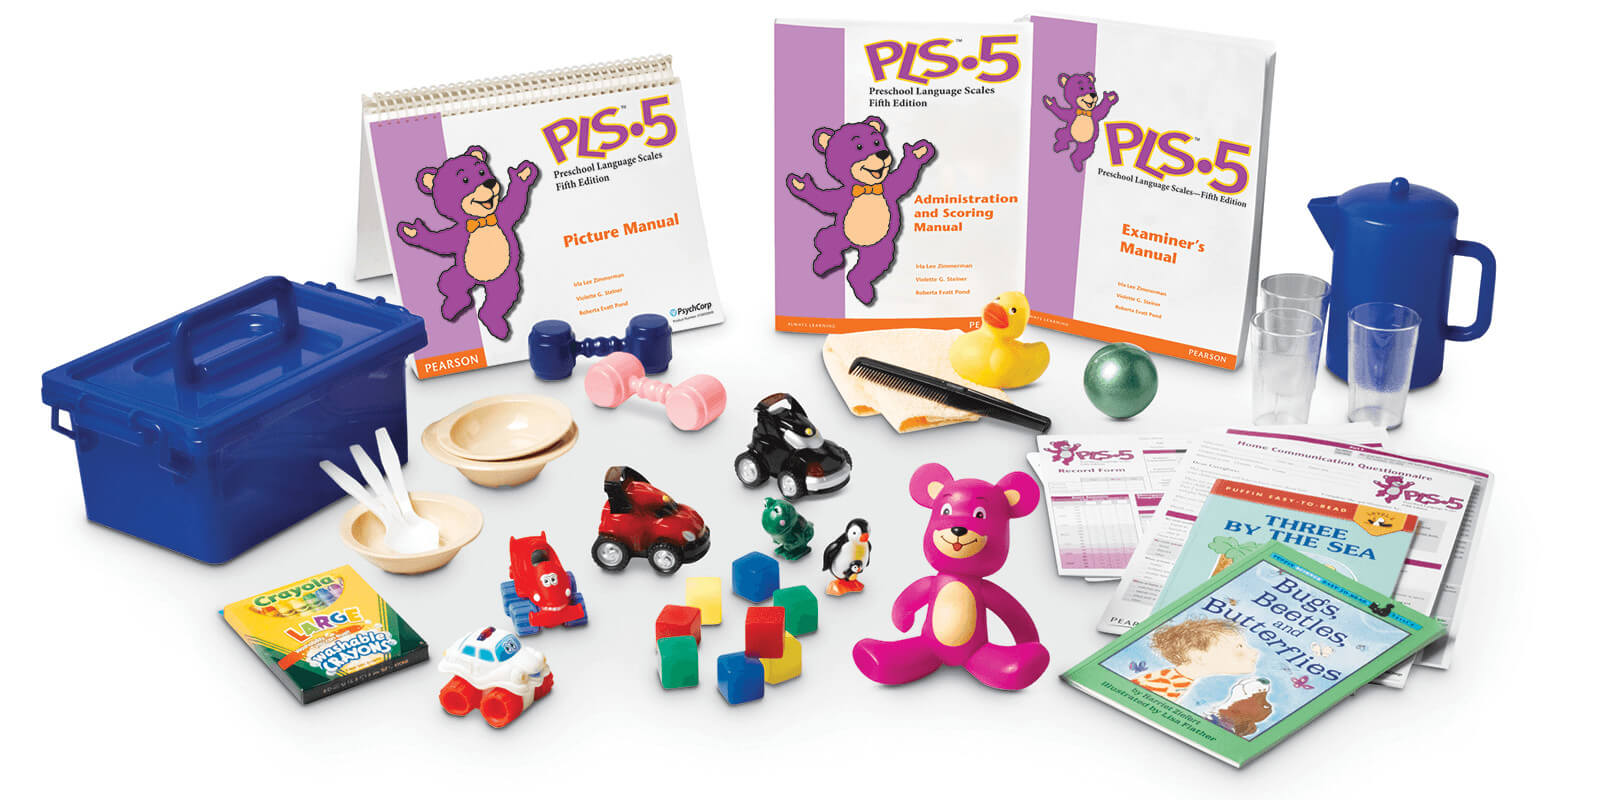 Preschool Language Scales Fifth Edition UK (PLS-5) - 